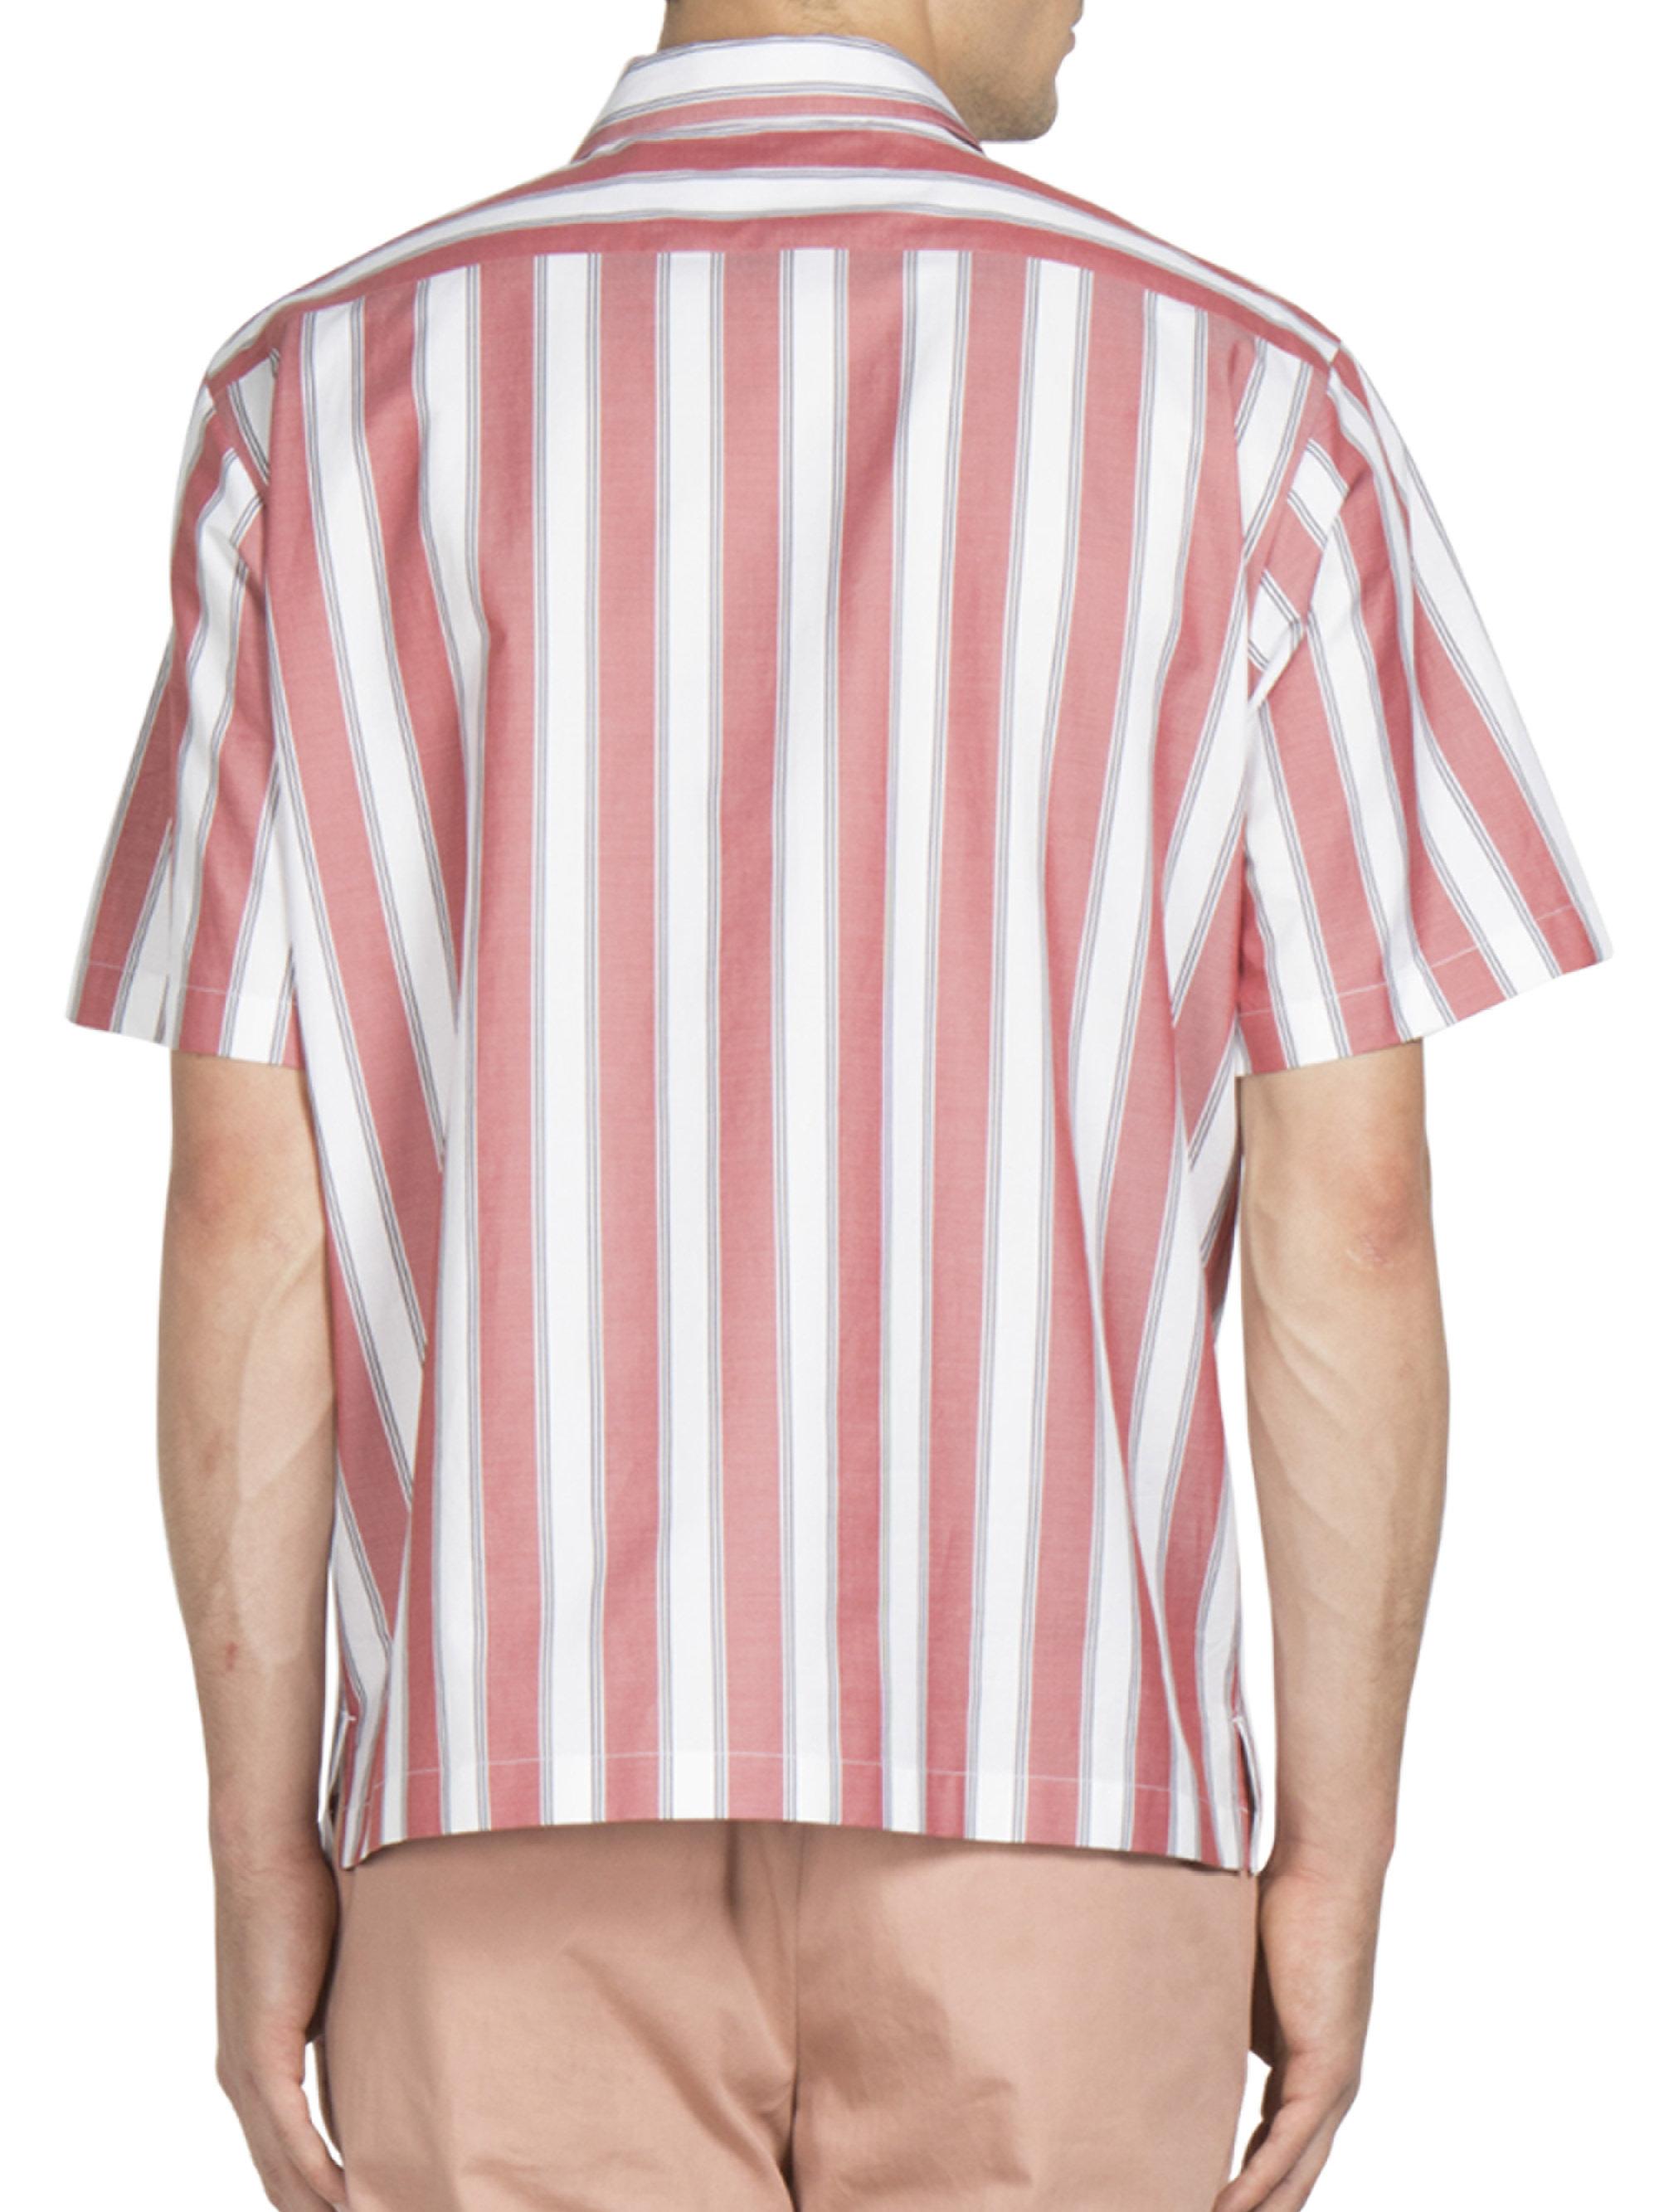 Stella McCartney Short Sleeve Striped Shirt in Pink for Men - Lyst